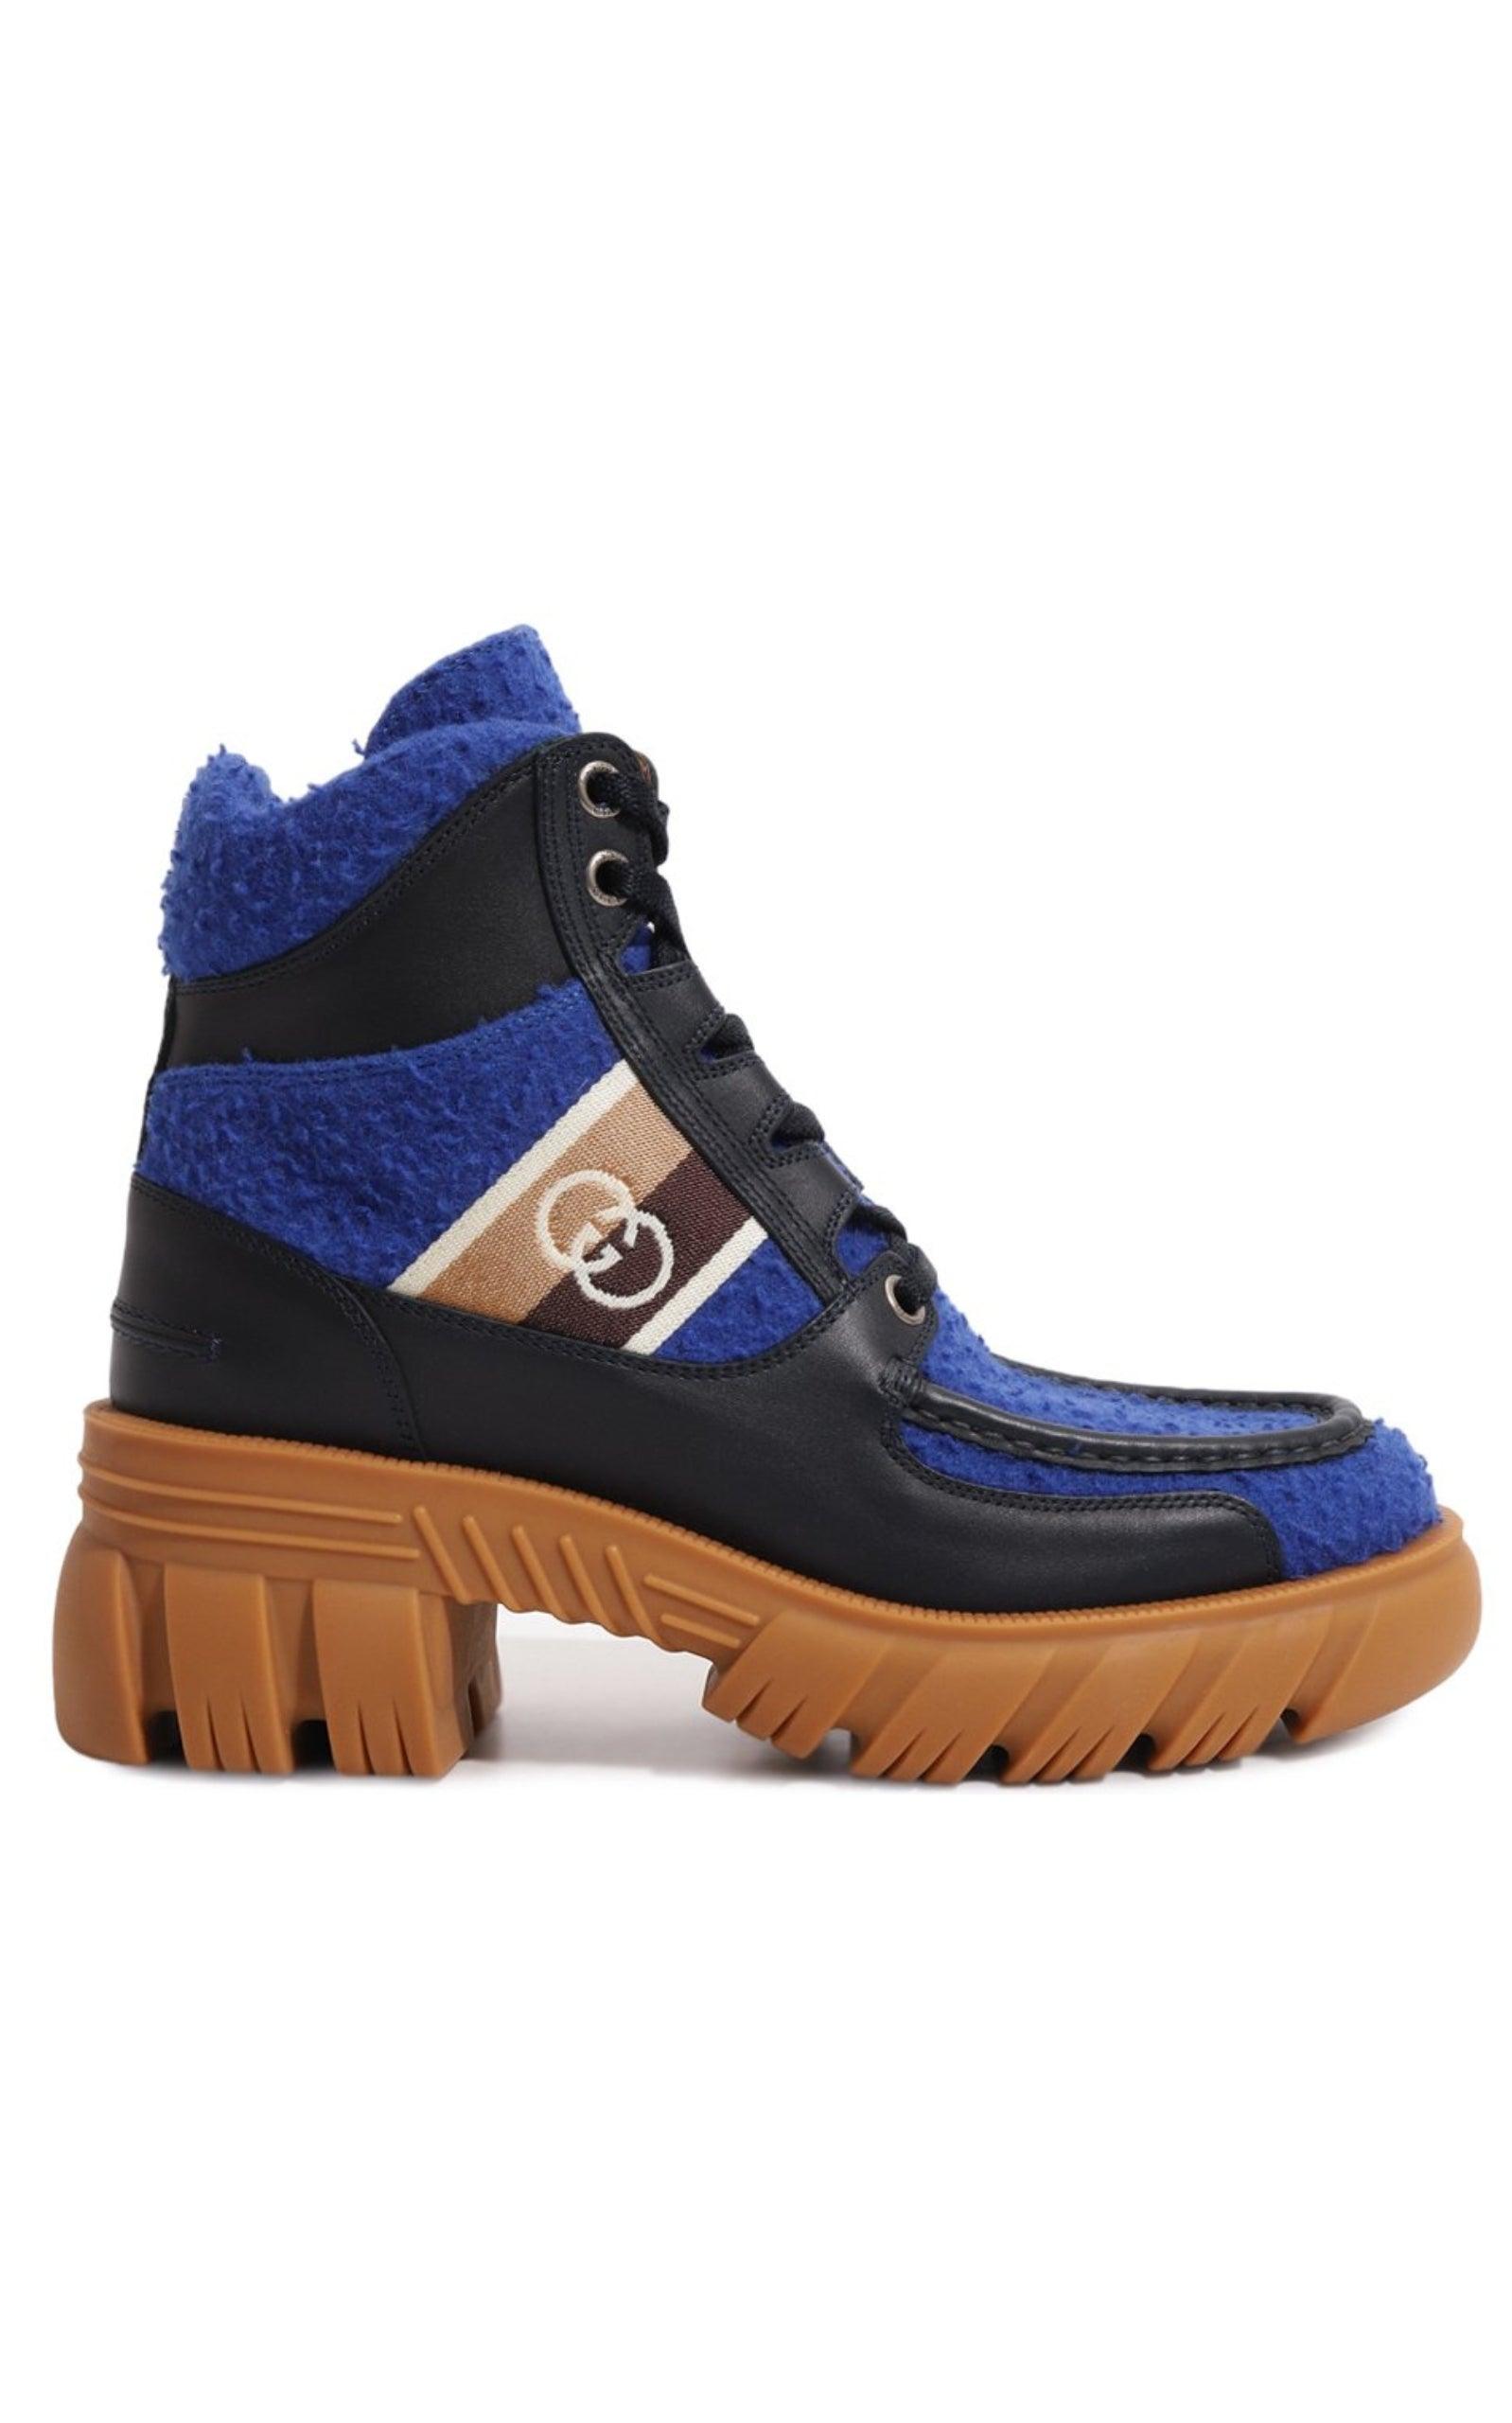 Louis Vuitton Laureate Desert Platform Ankle Boots UK 2.5 EU 35.5